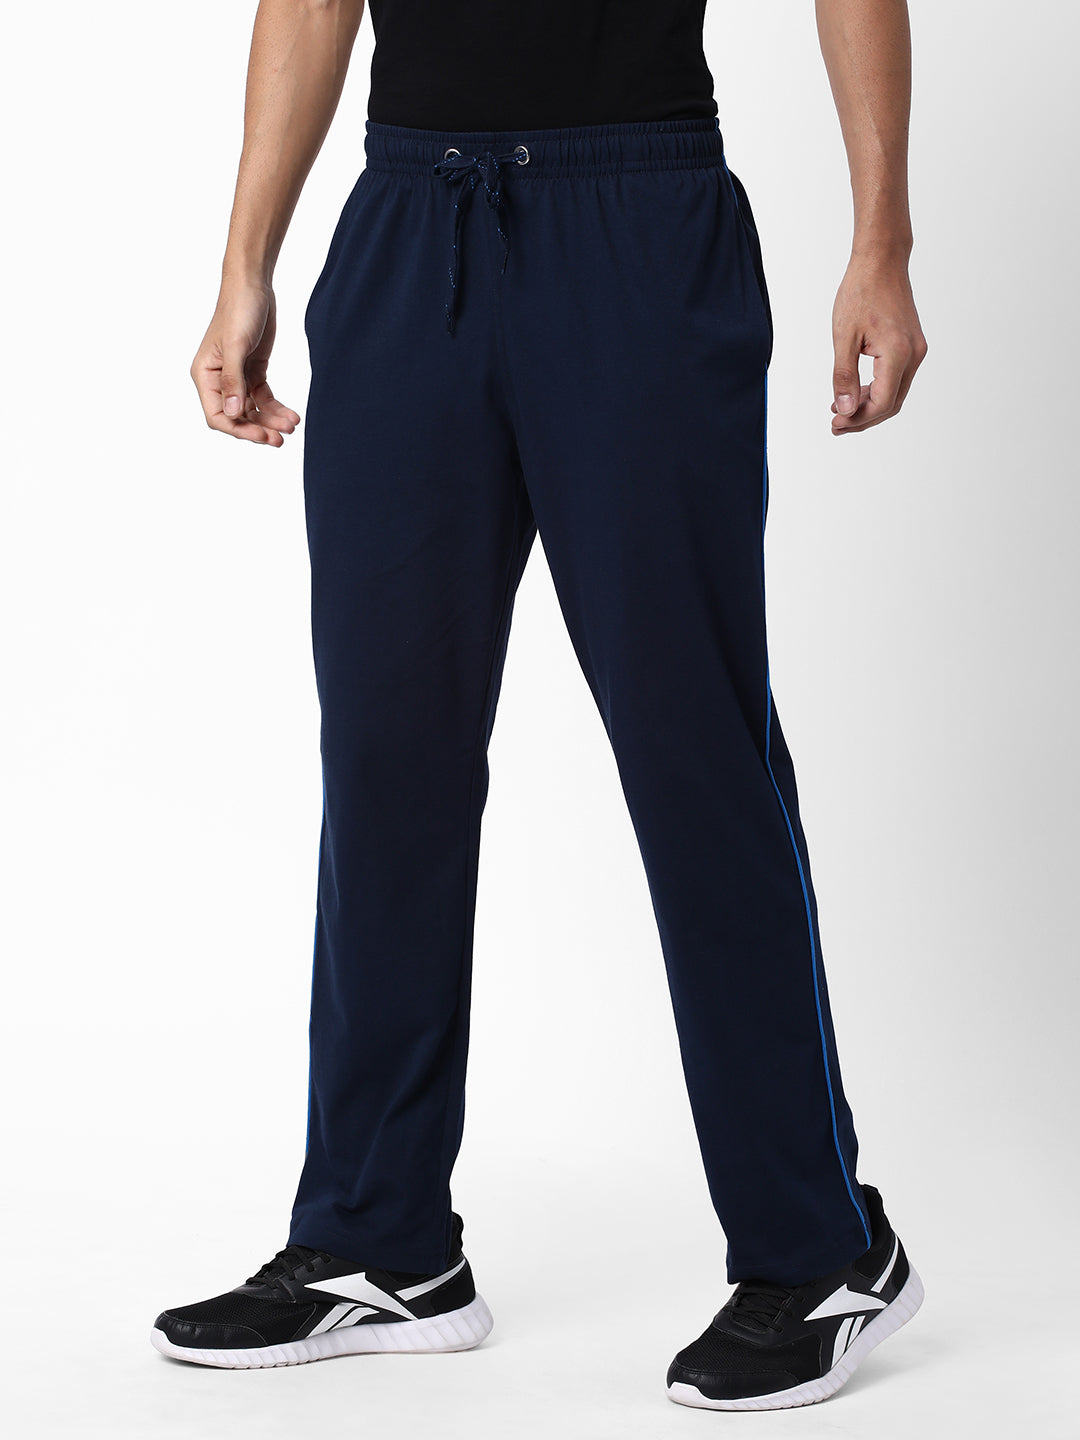 Buy Jockey IM07 Men's Microfiber Slim Fit All Day Navy Blue Trackpant online